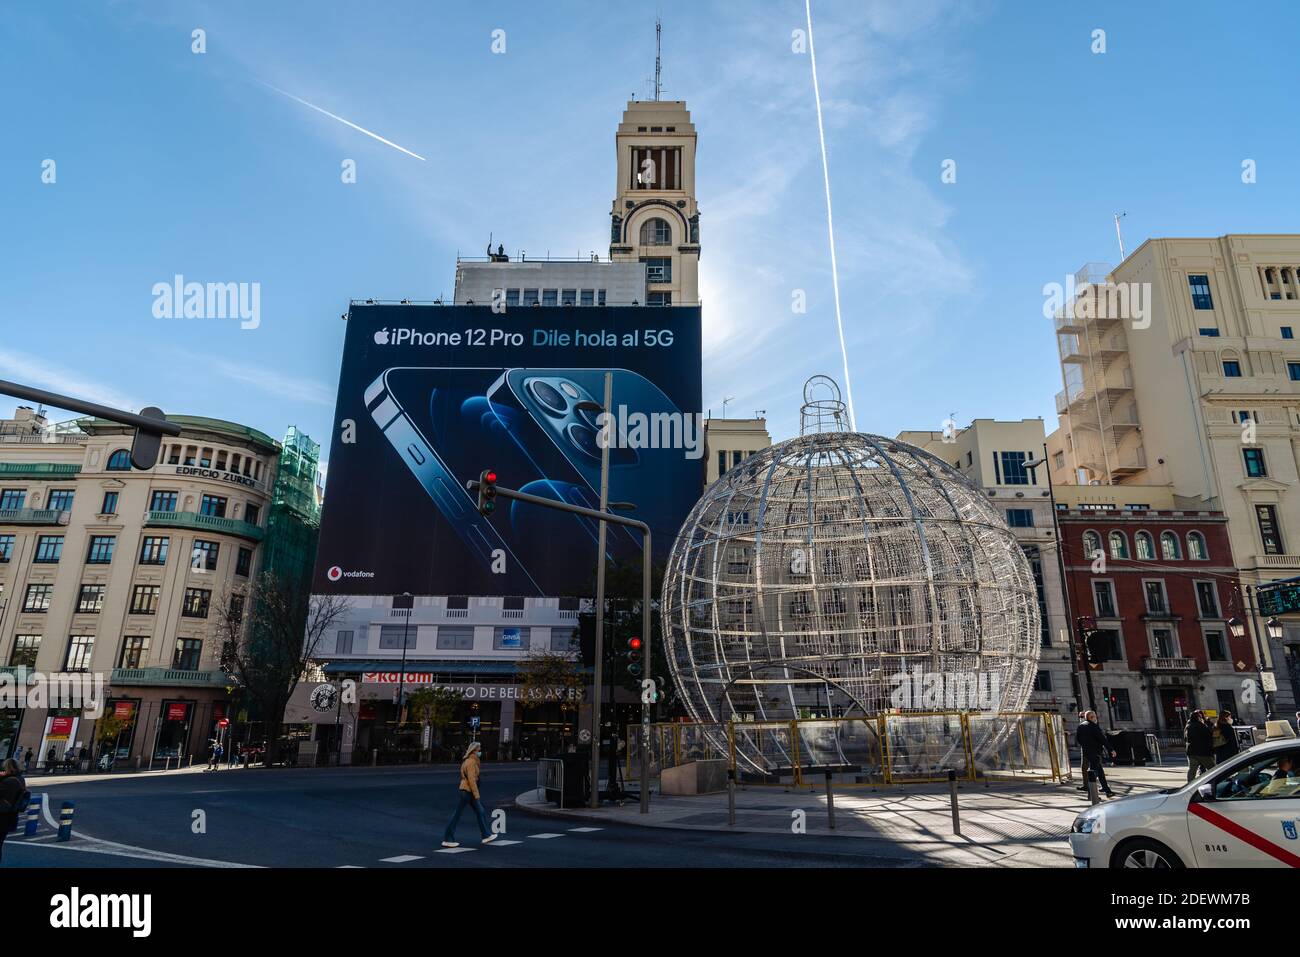 Madrid, Spain - November 22, 2020: Iphone 12 Pro banner on the facade of Circulo de Bellas Artes building in Madrid Stock Photo